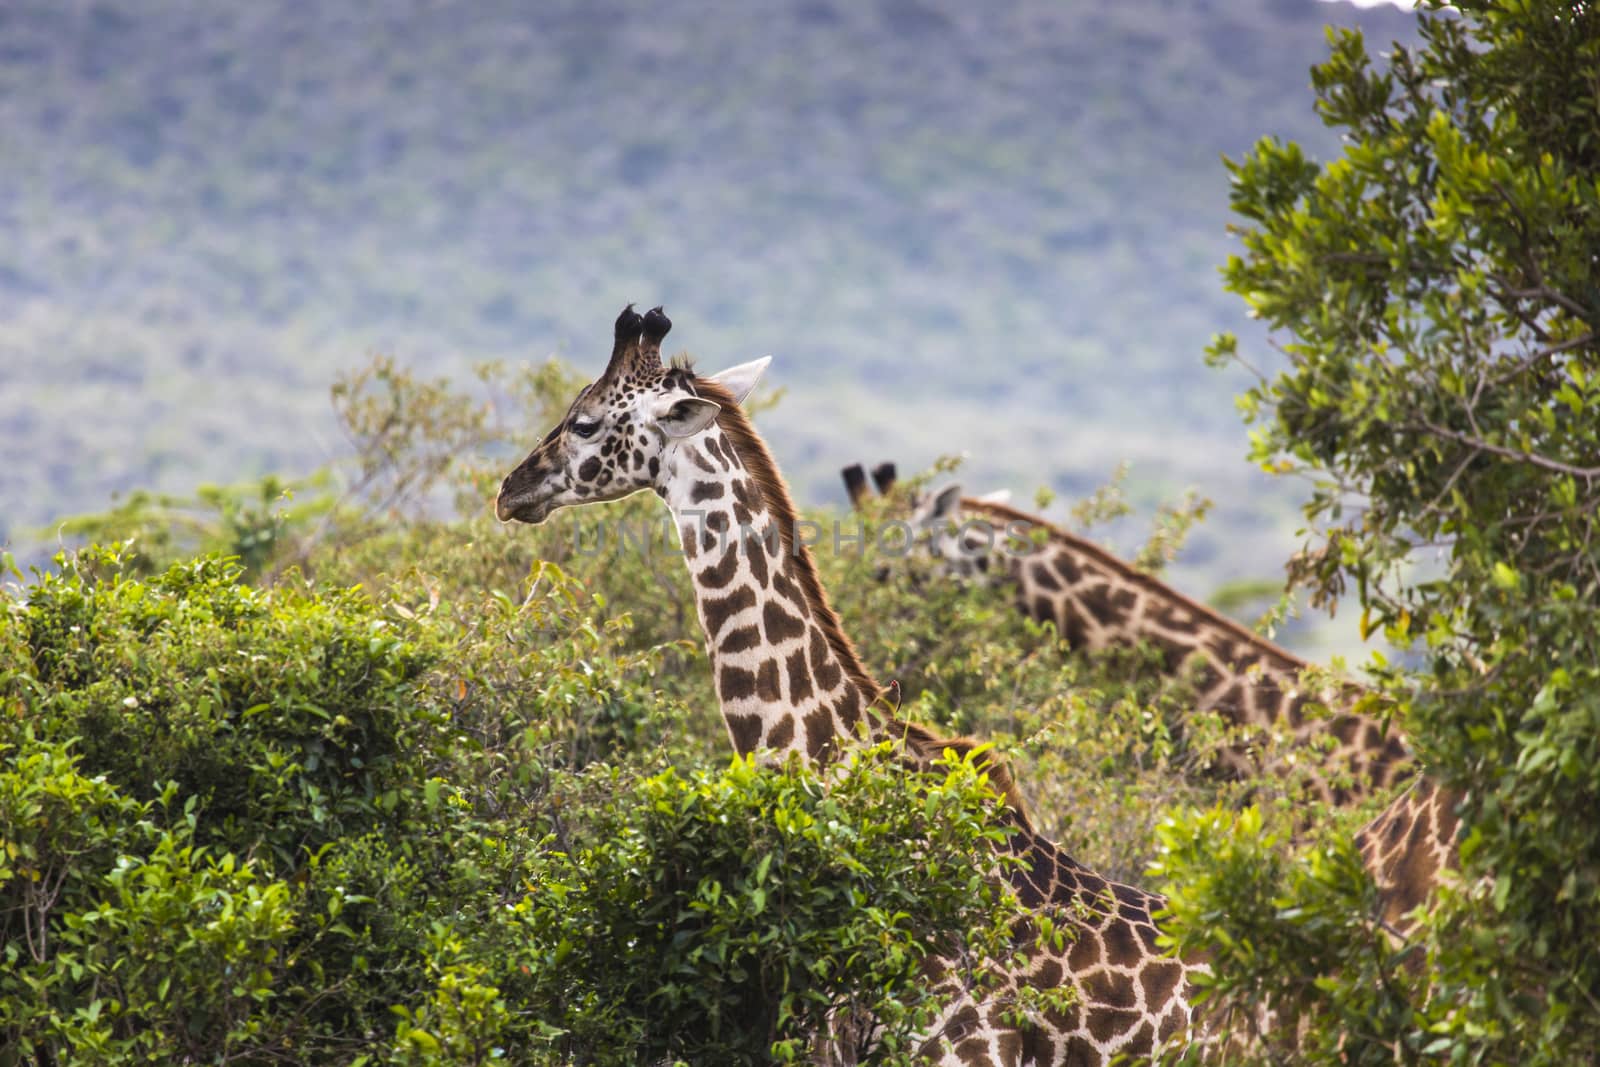 Giraffe on safari wild drive, Kenia.